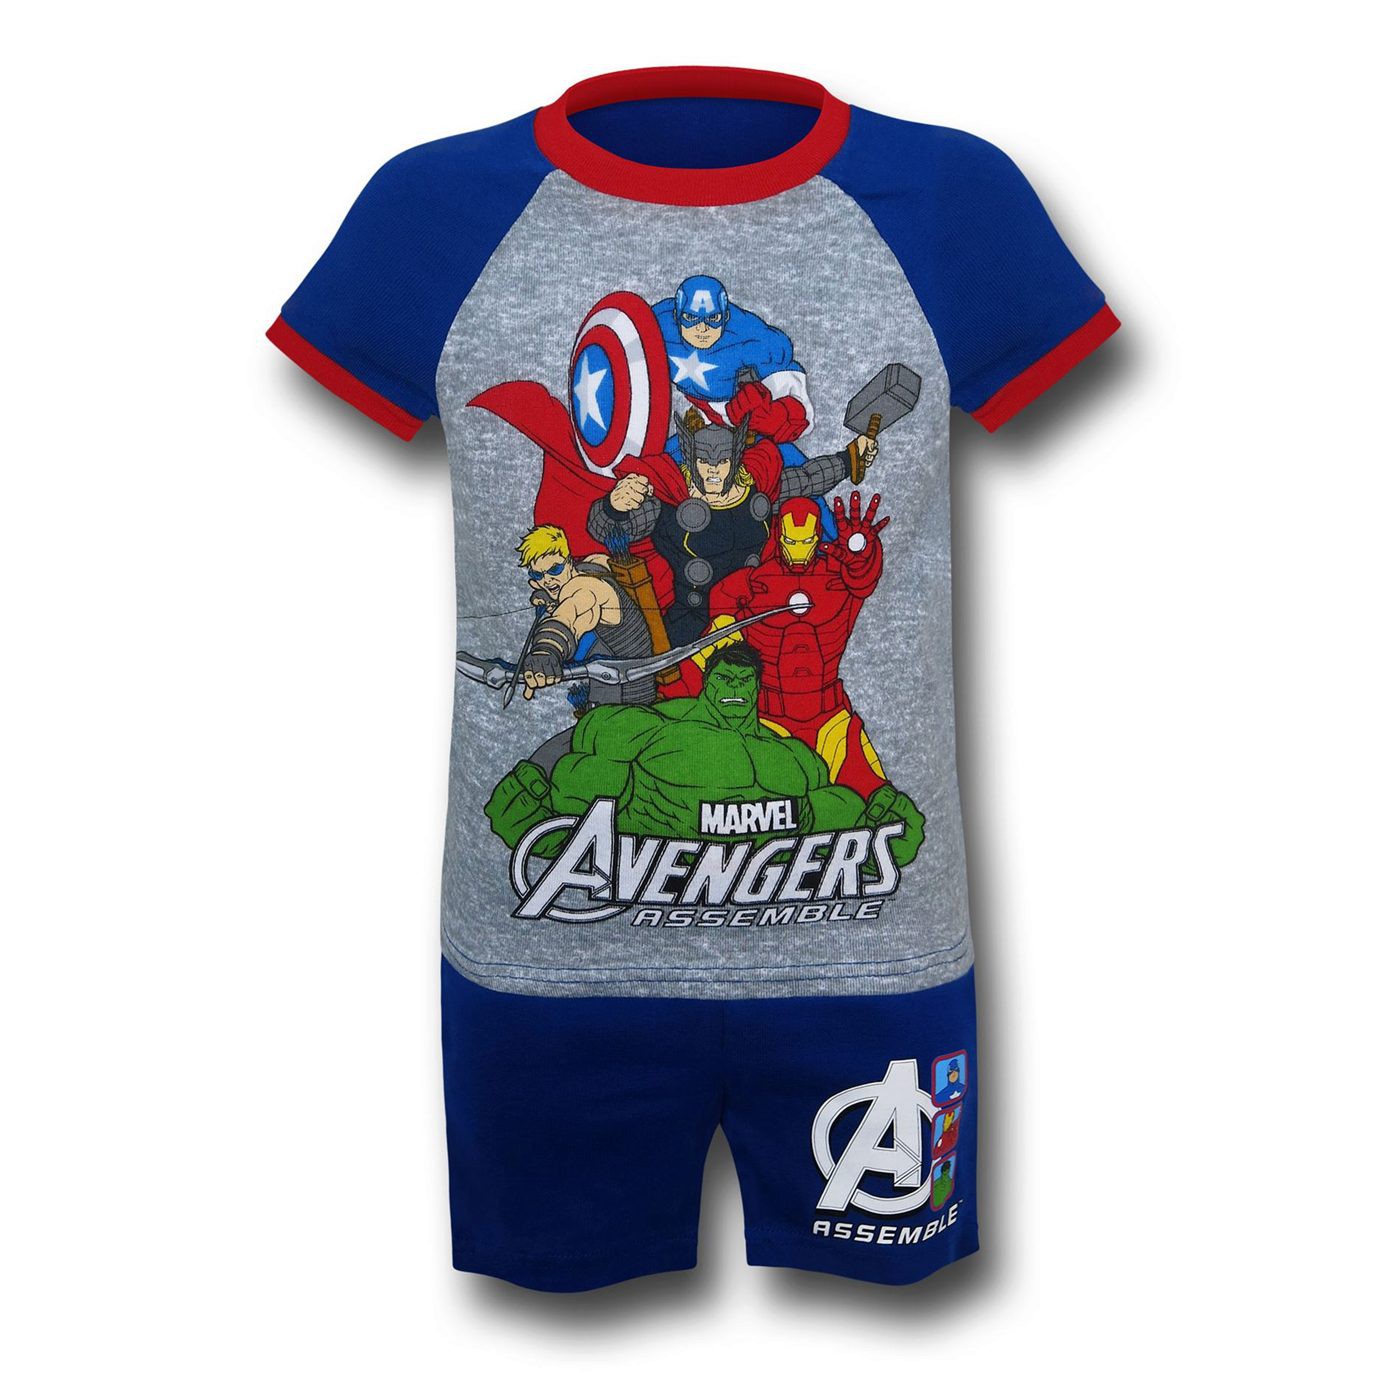 Avengers Kids Shorts and Shirt PJ Sleep Set